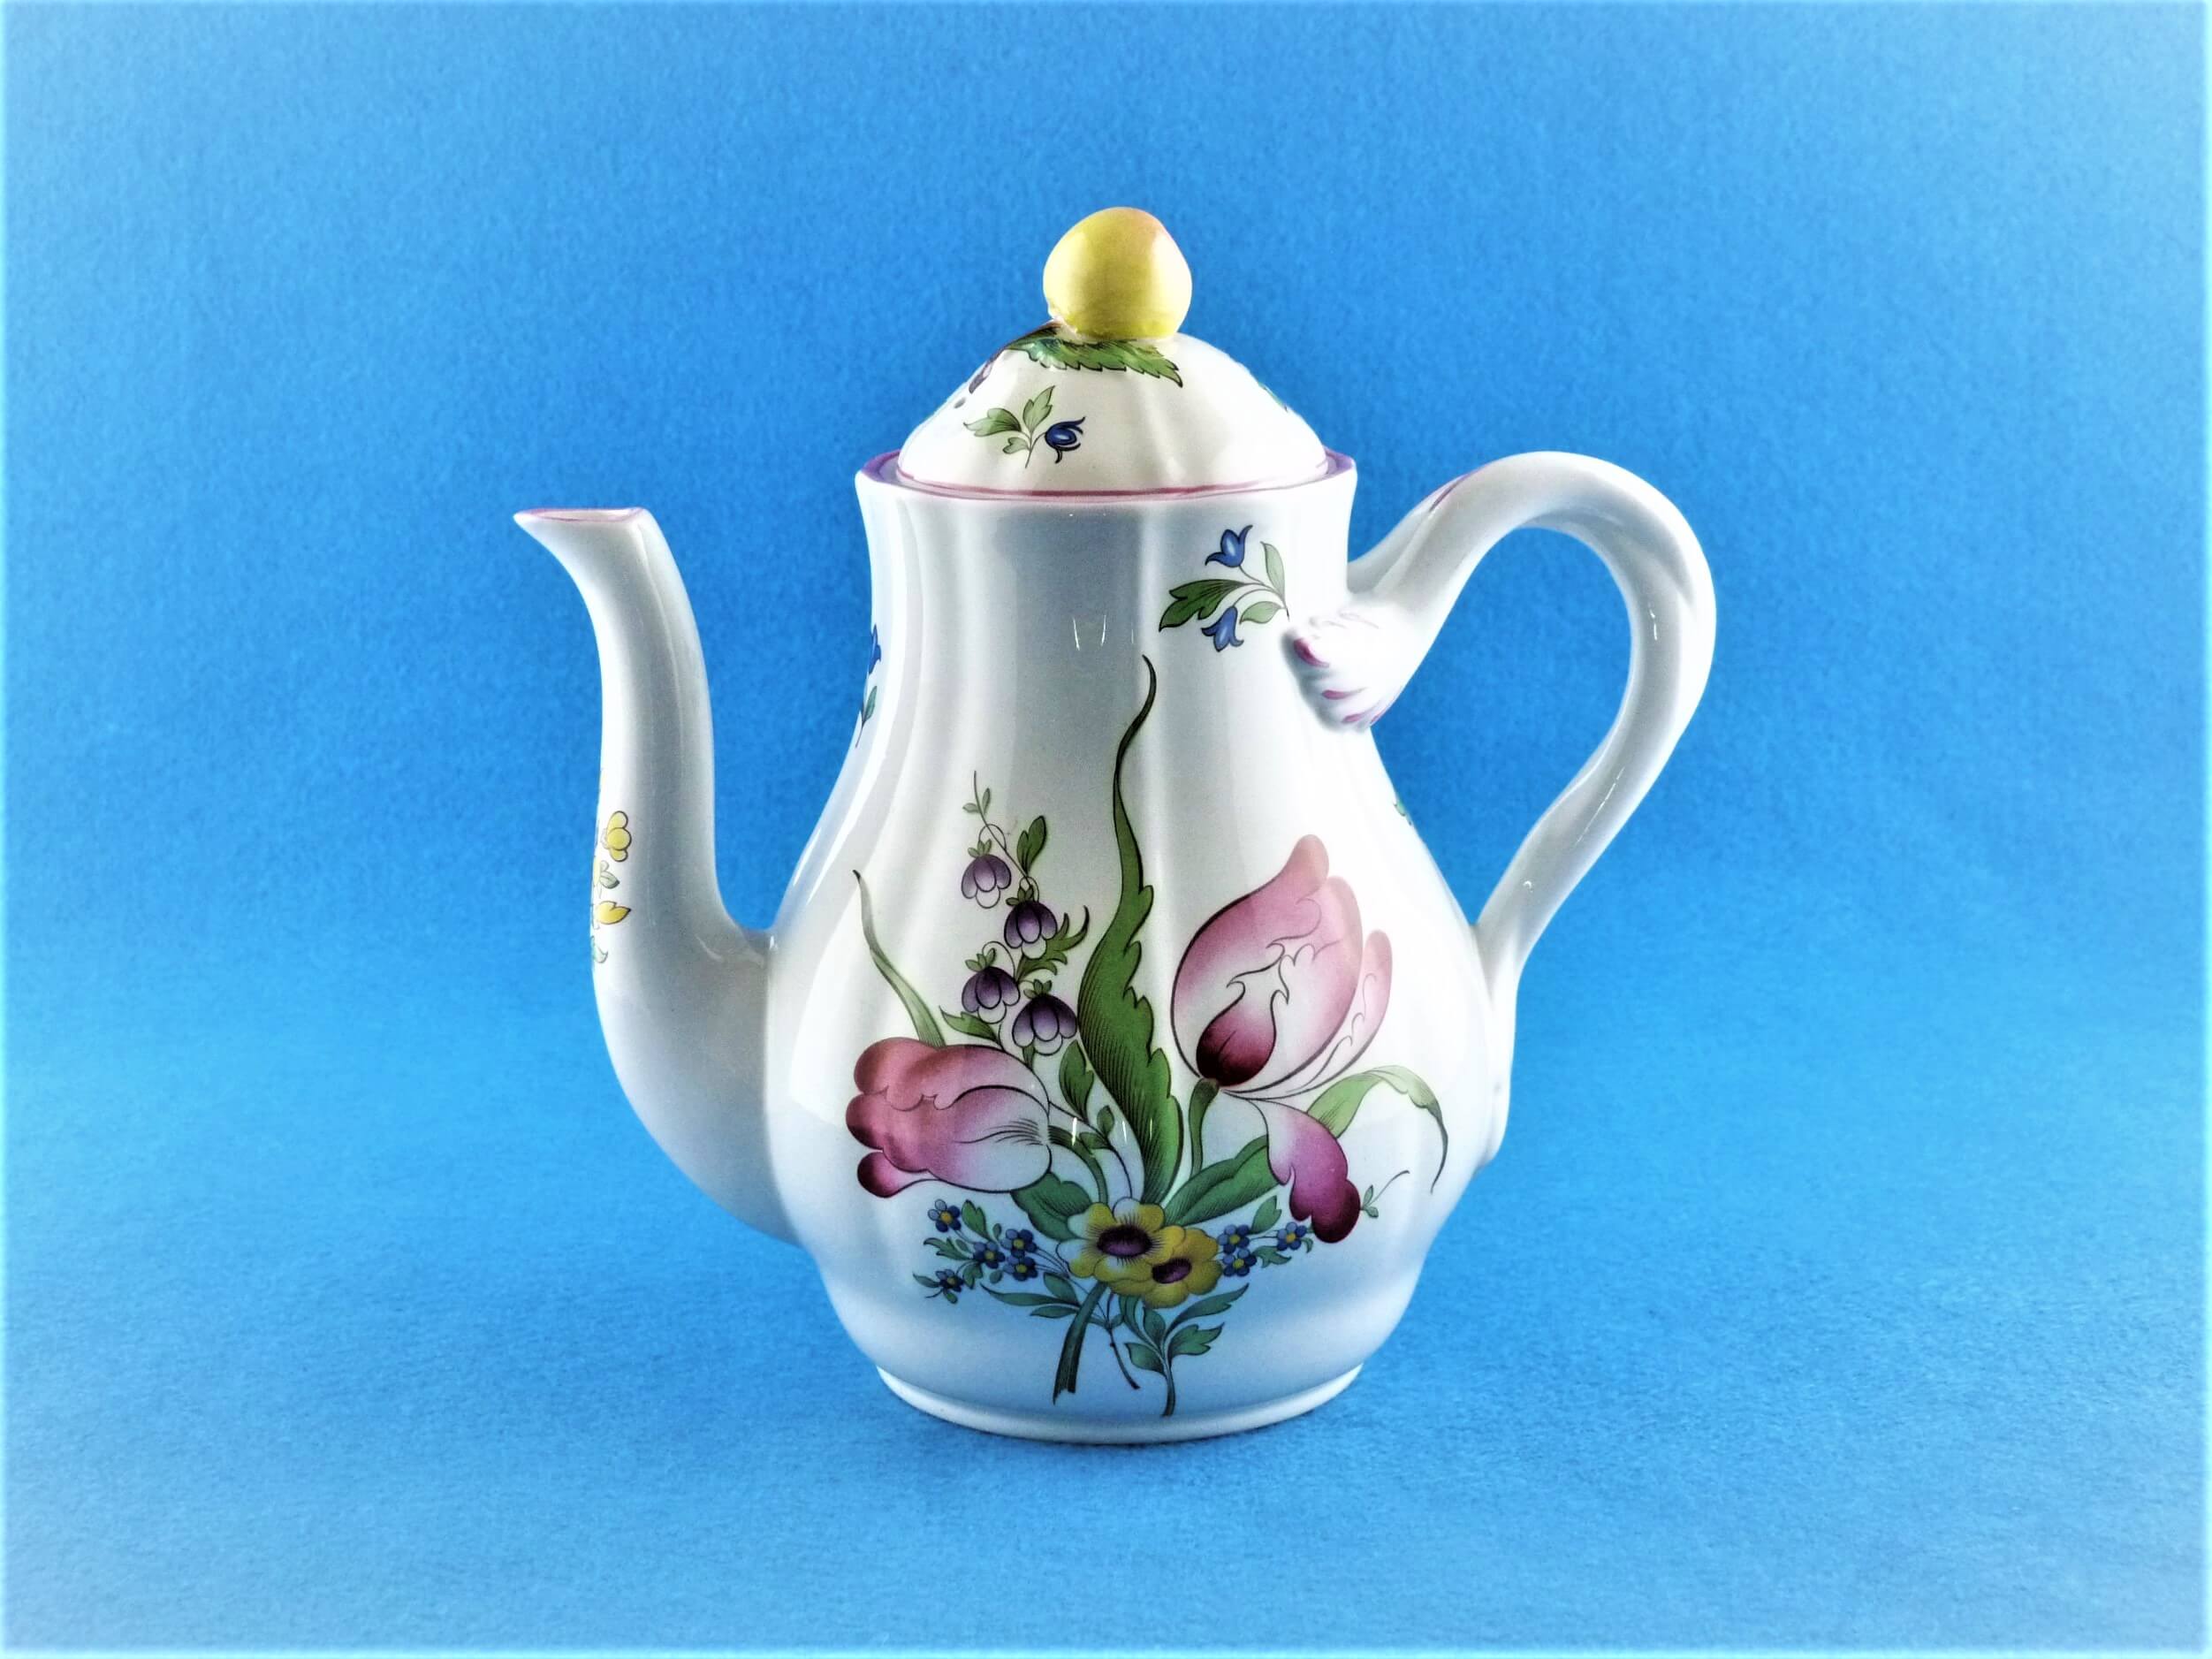 Retro Insulated Teapot by Heatmaster,  Australia